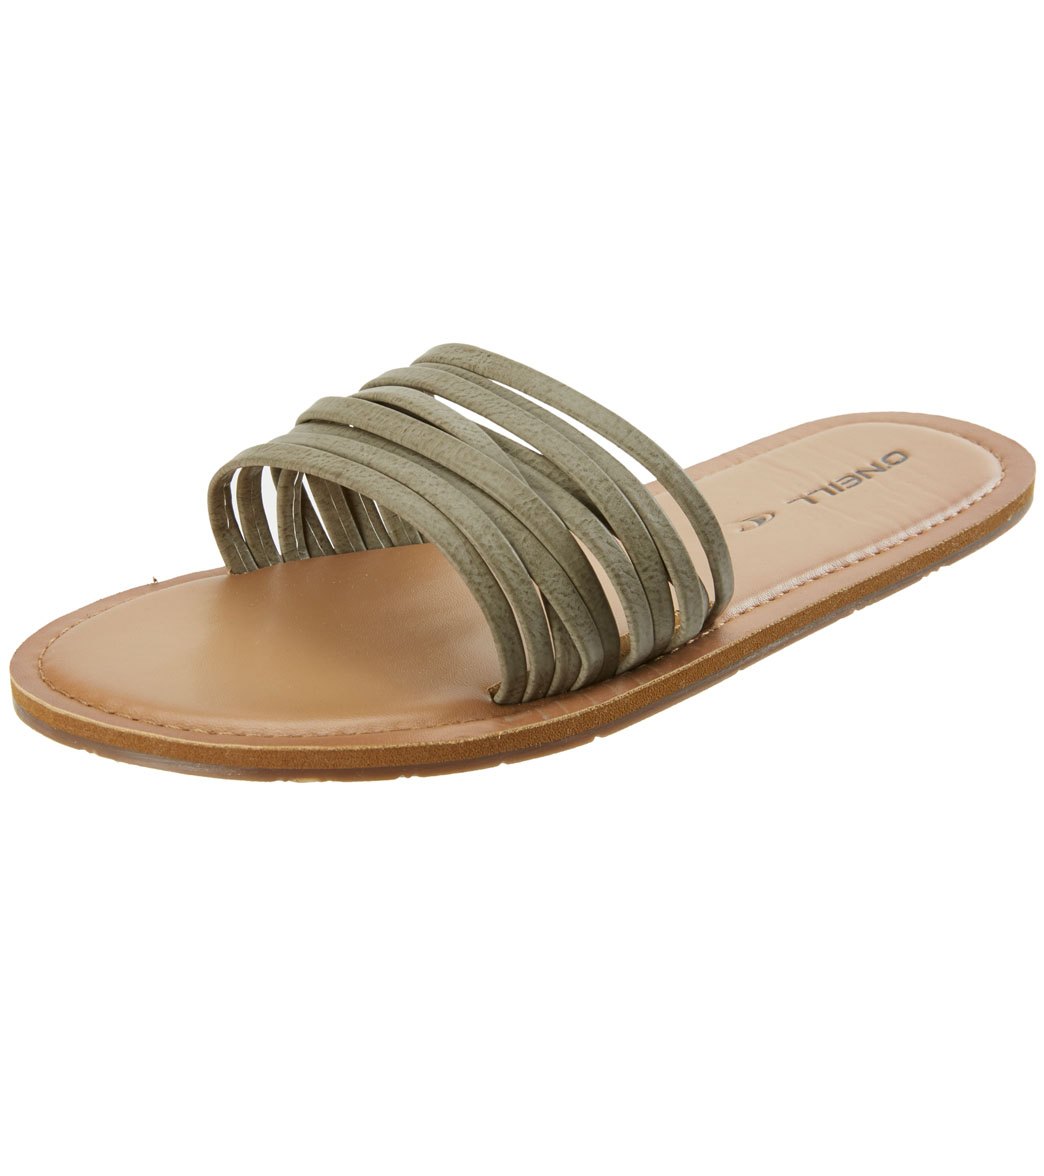 O'neill Women's Laguna Slides Sandals - Olive 10 - Swimoutlet.com